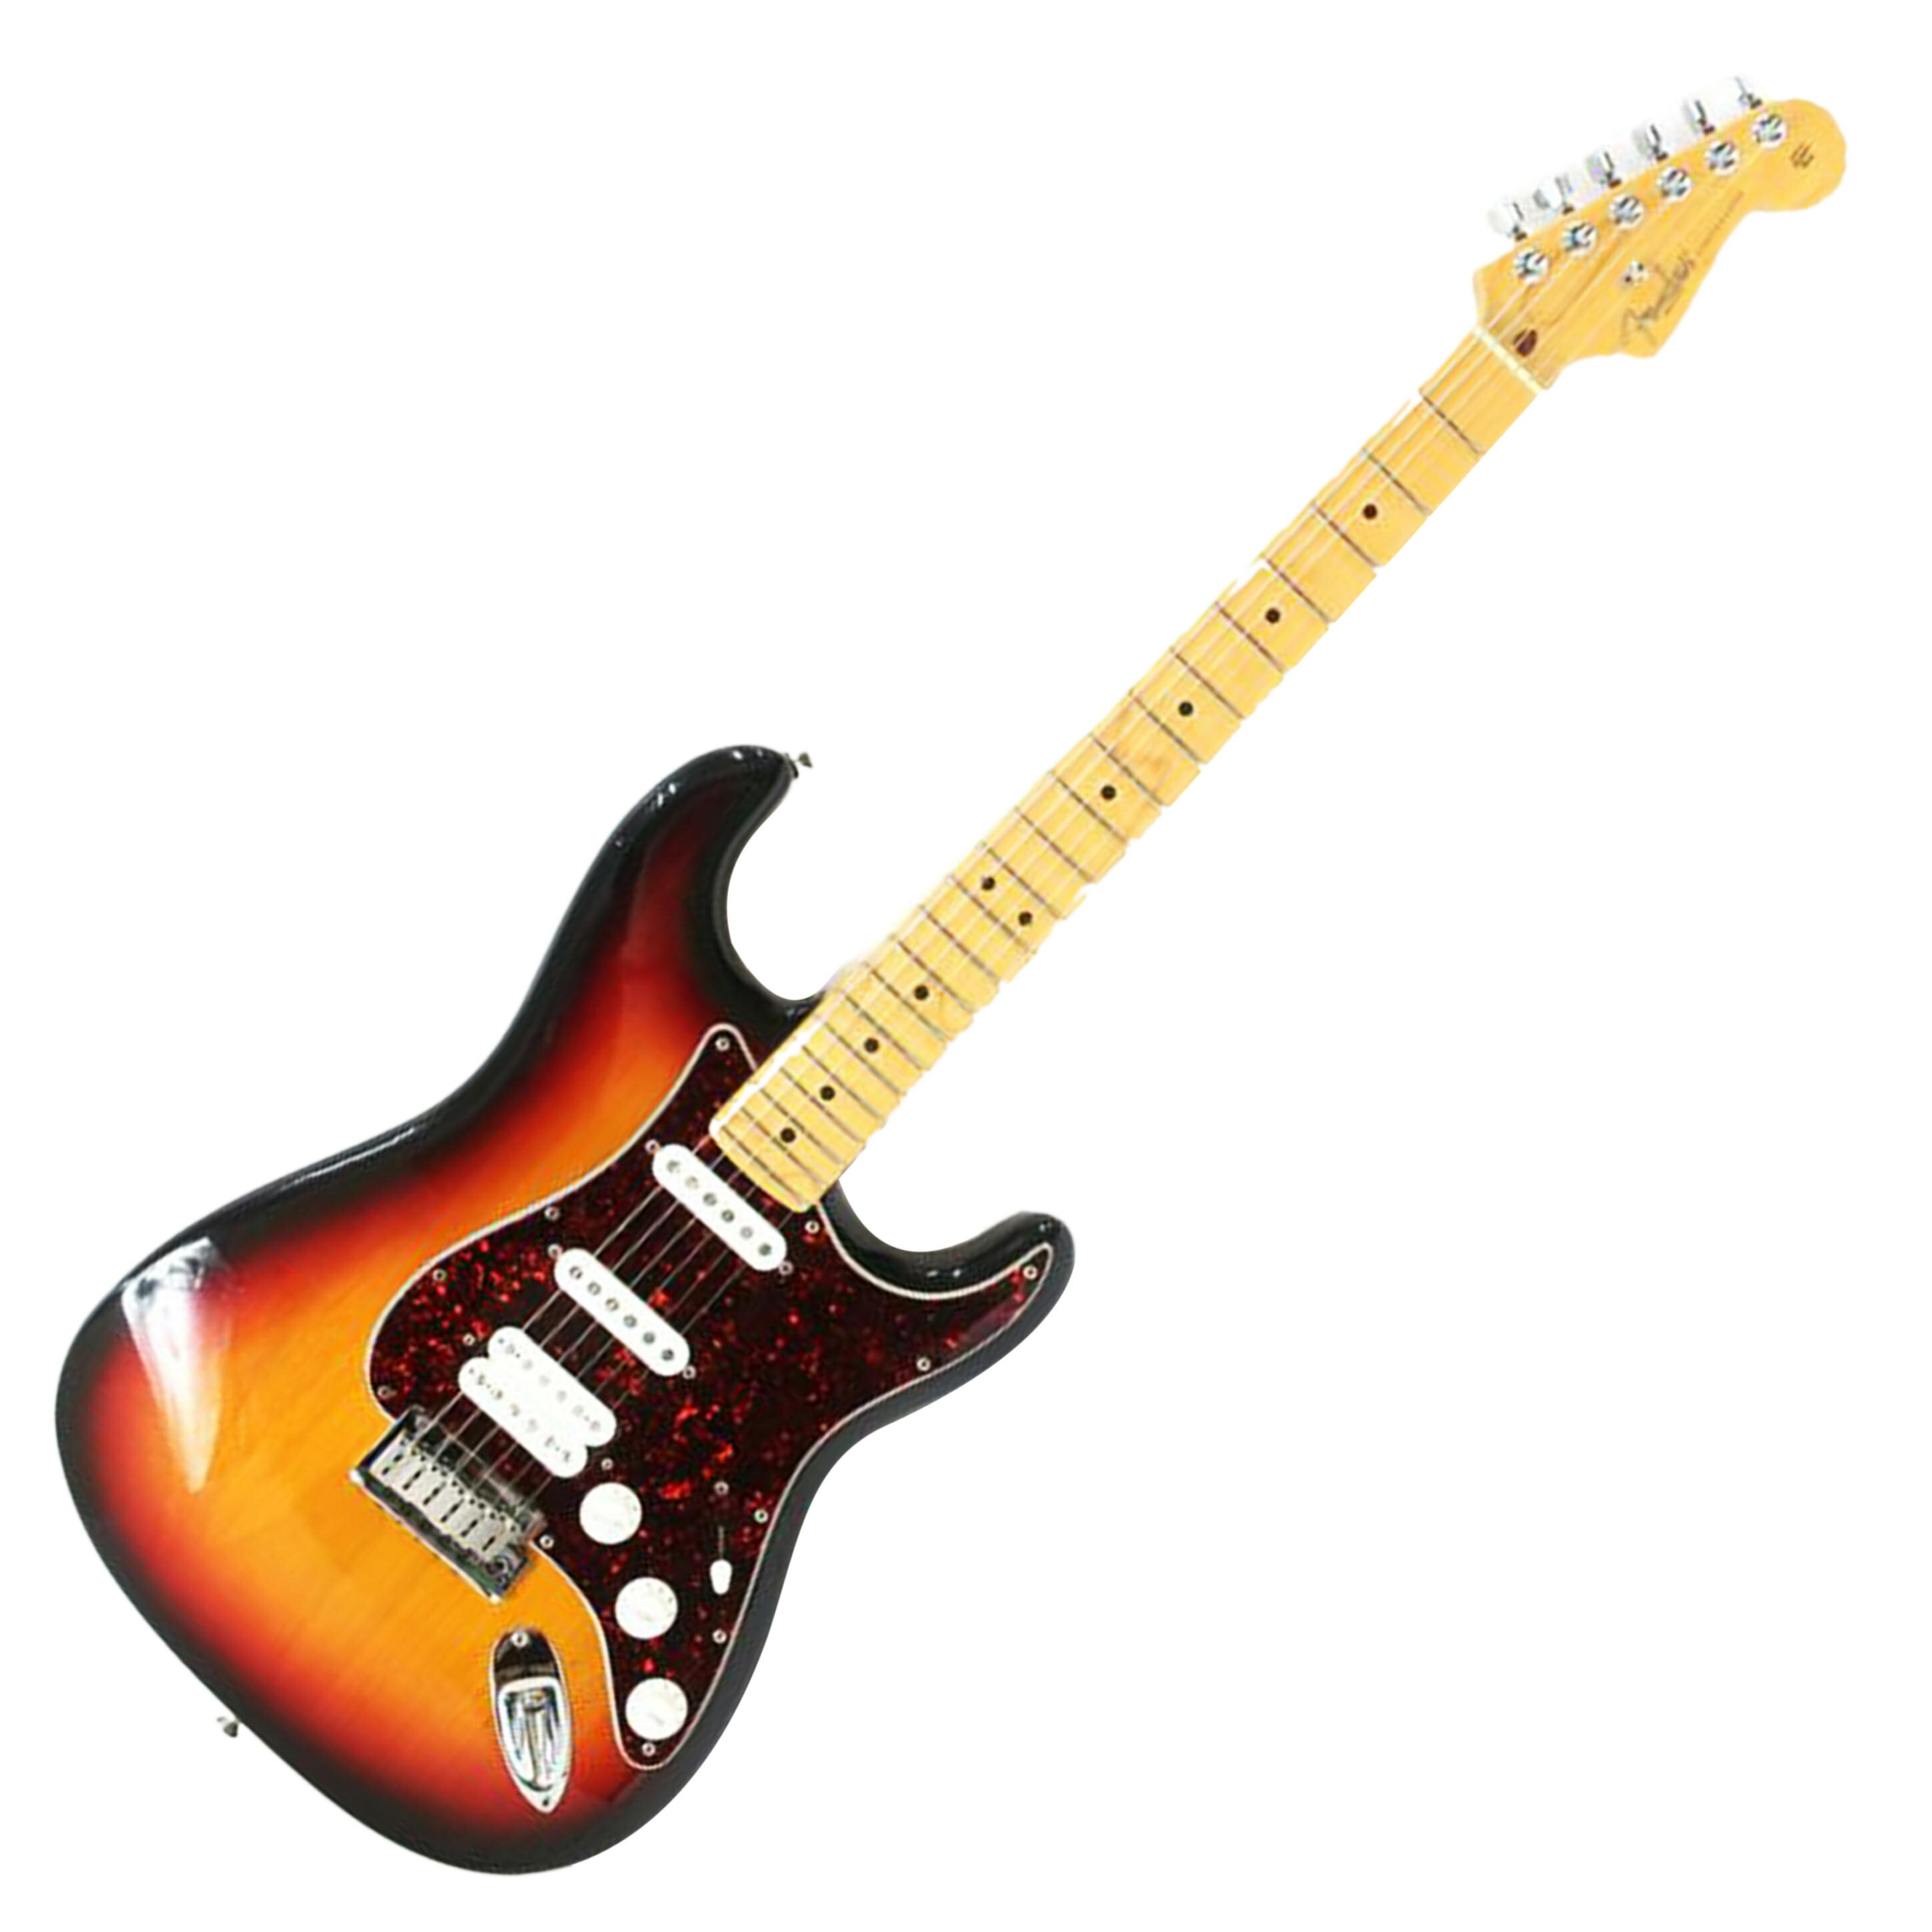  XXgLX^[ GLM^[Fender USA tF_[Stratocaster Z3018096RfBVNyCzii No.65-0j